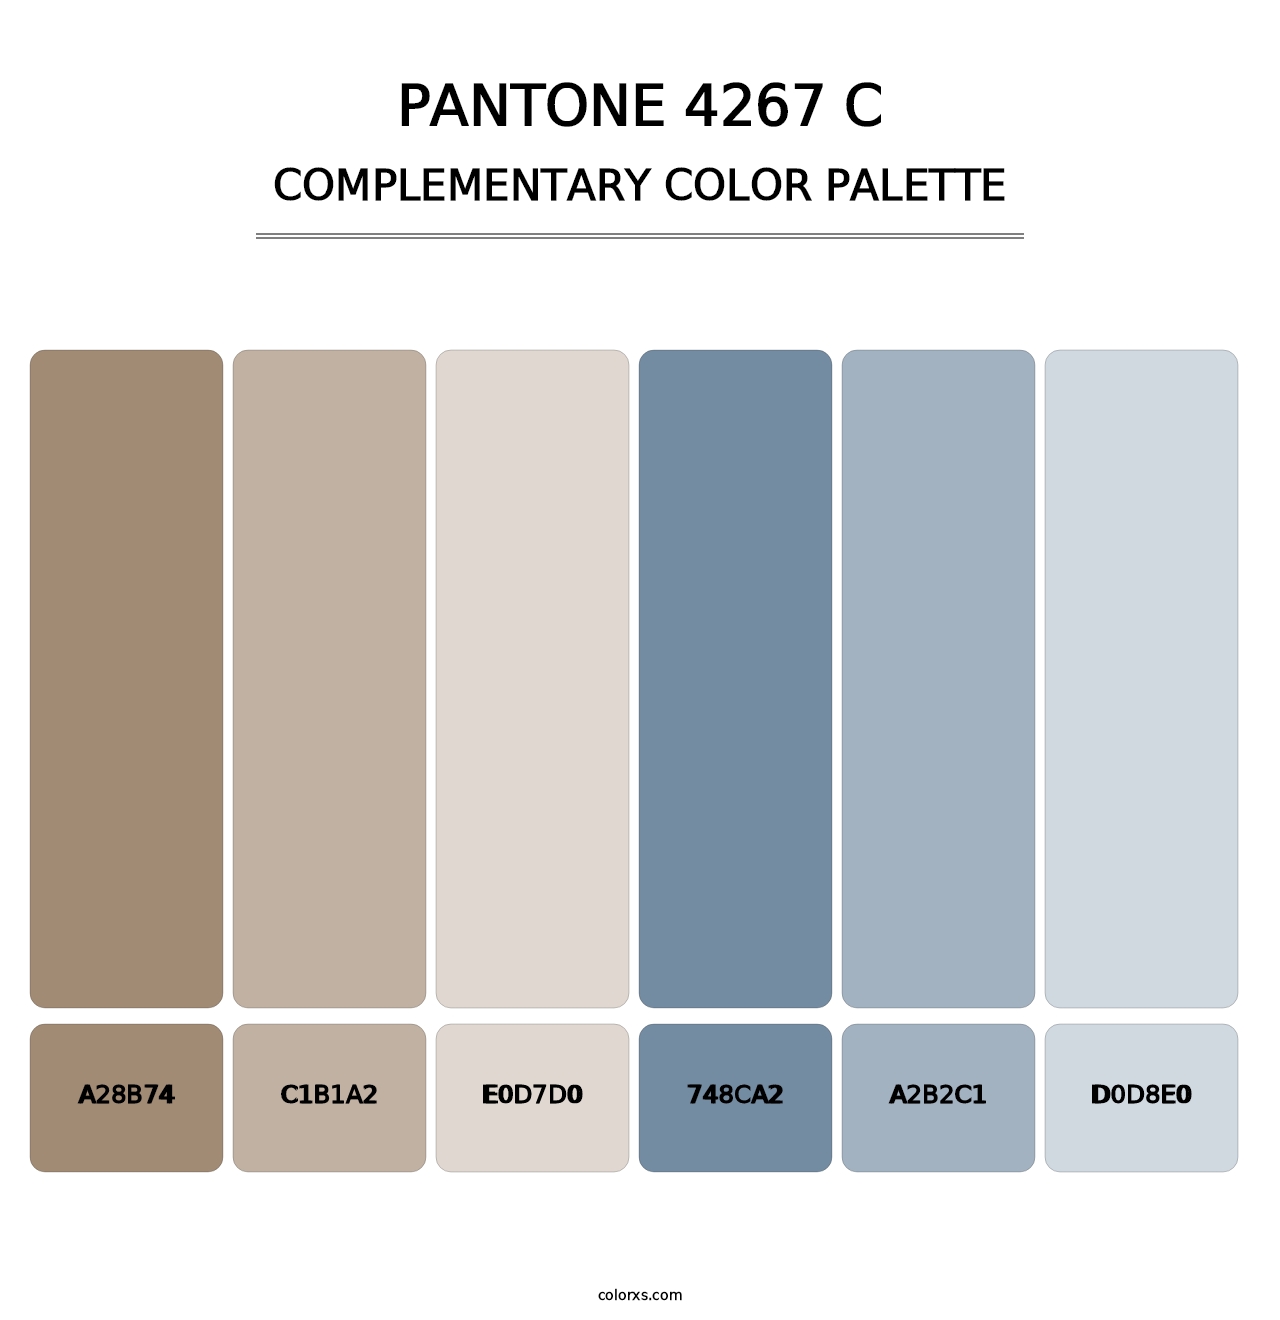 PANTONE 4267 C - Complementary Color Palette